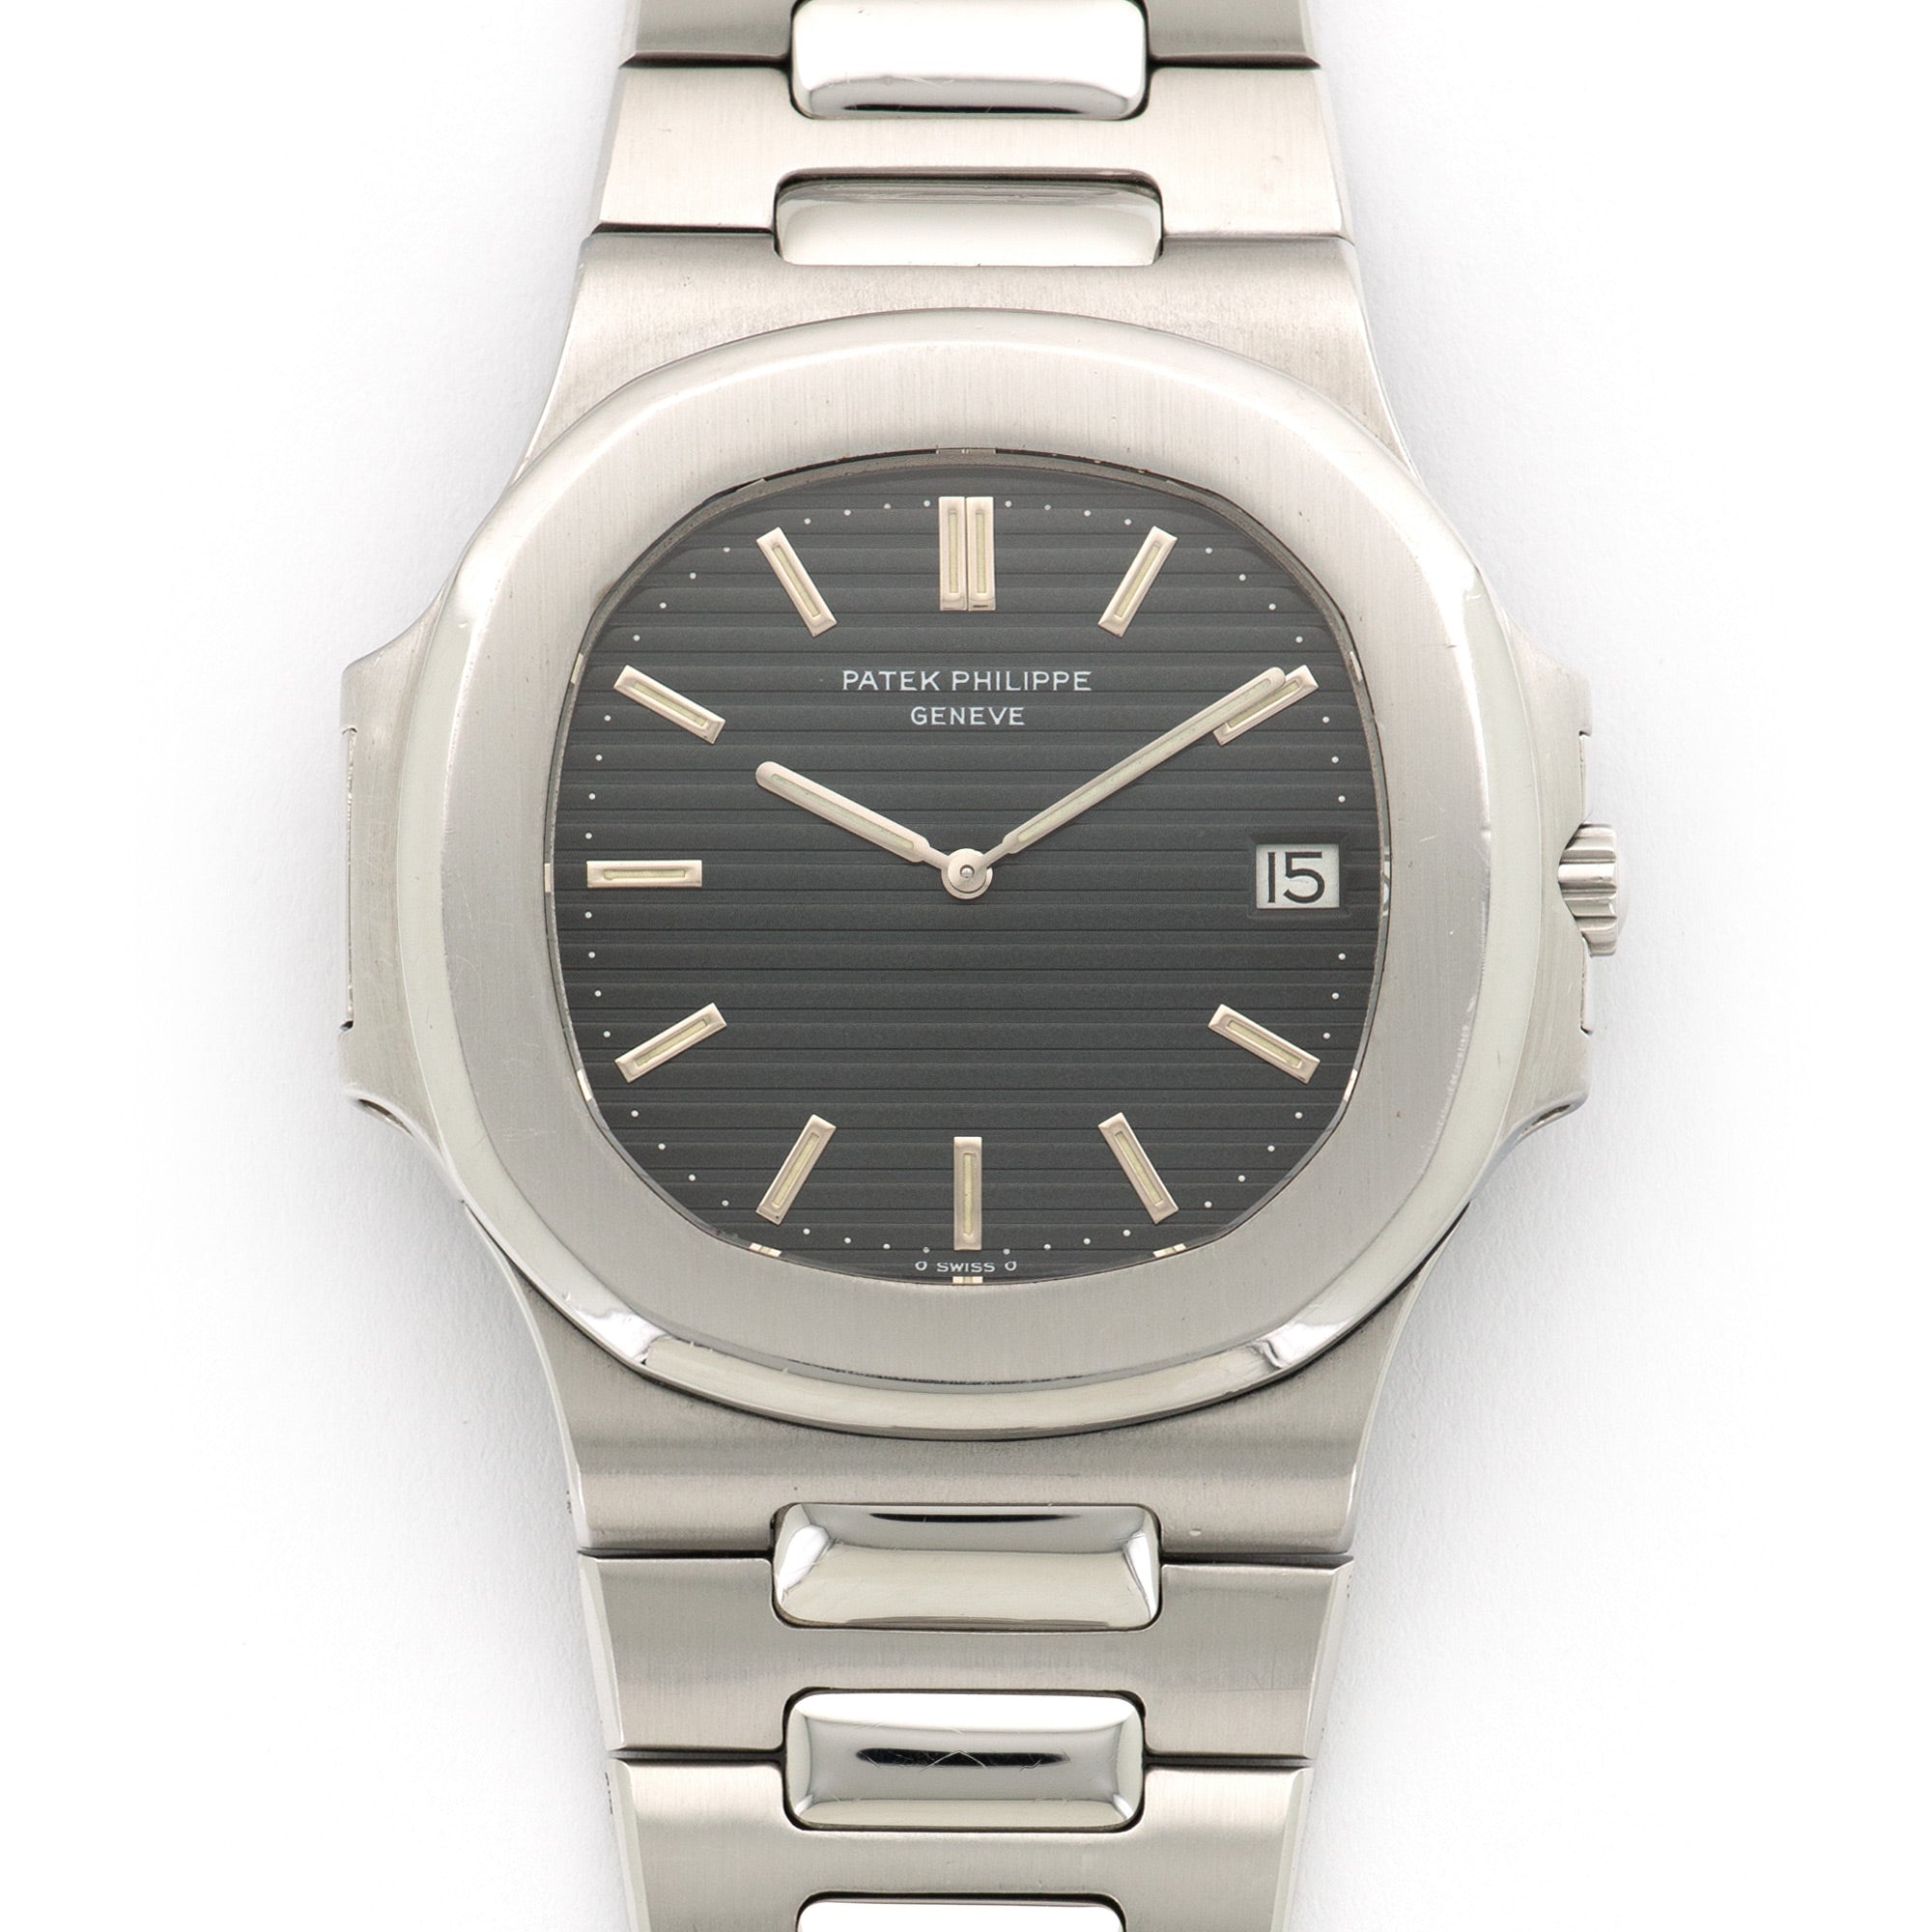 Patek Philippe - Patek Philippe Nautilus Jumbo Watch Ref. 3700 with Original Warranty - The Keystone Watches